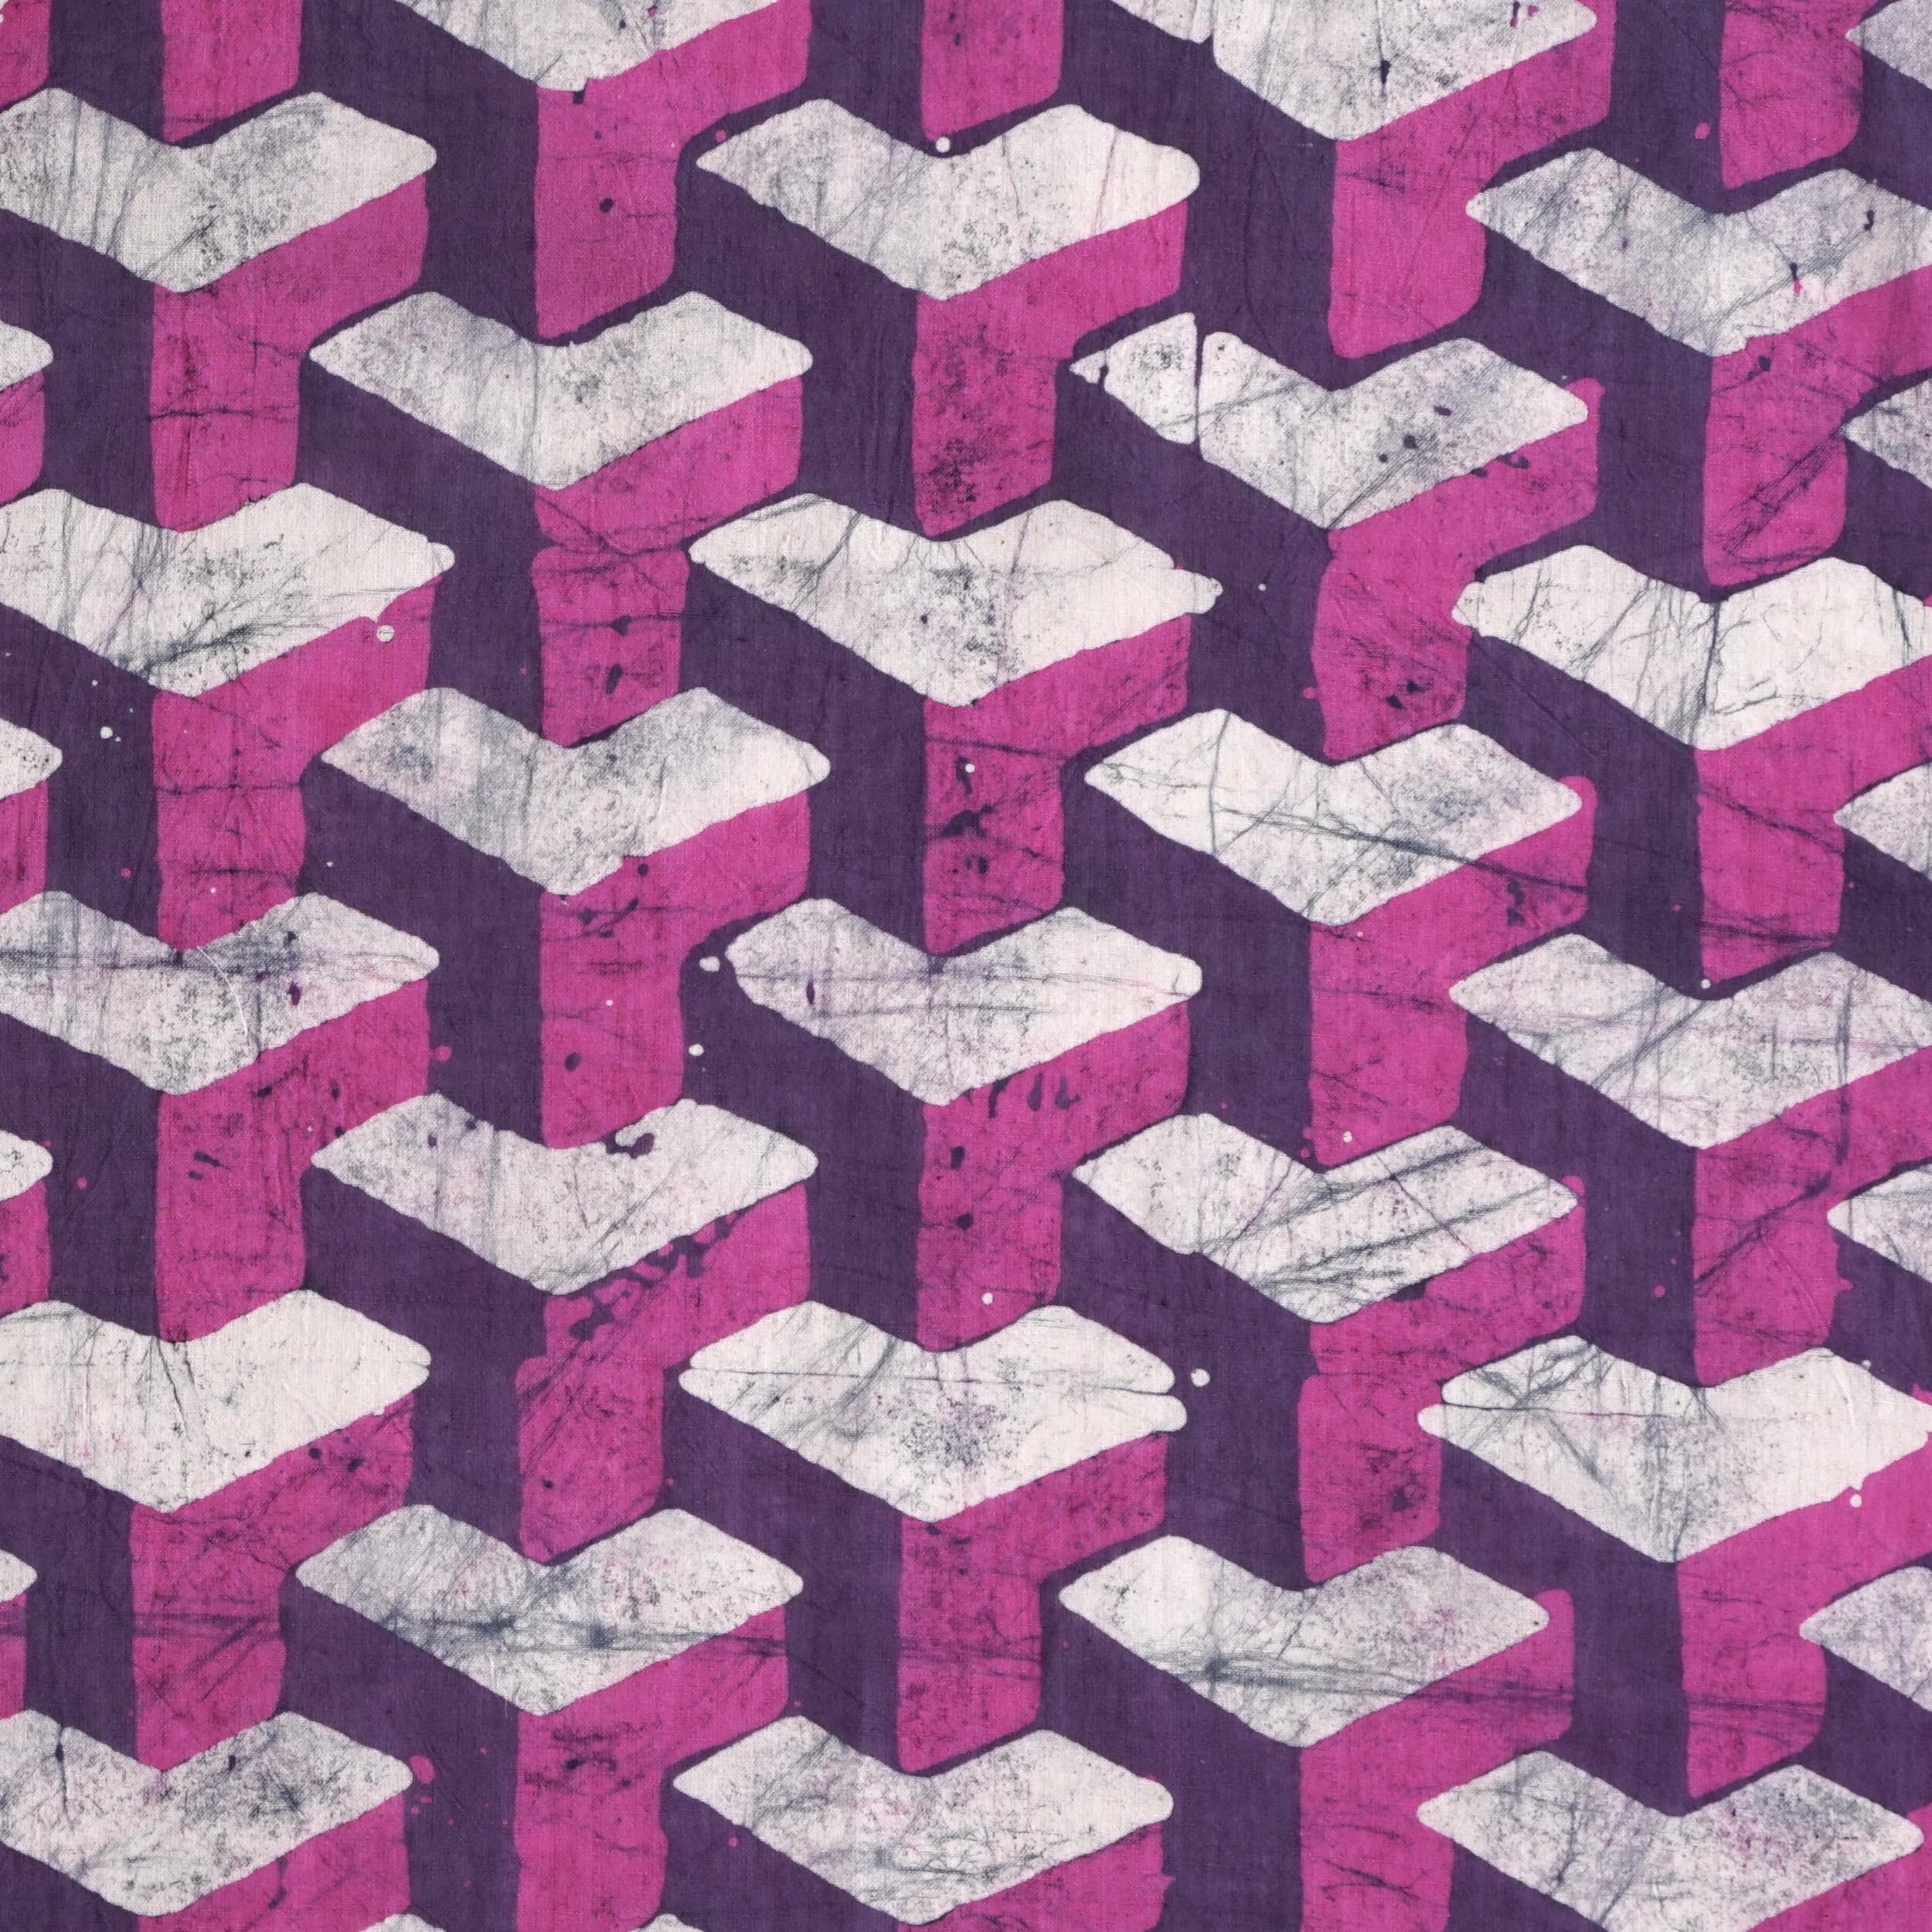 100% Block-Printed Batik Cotton Fabric From India - Purple Building Blocks Motif - Flat